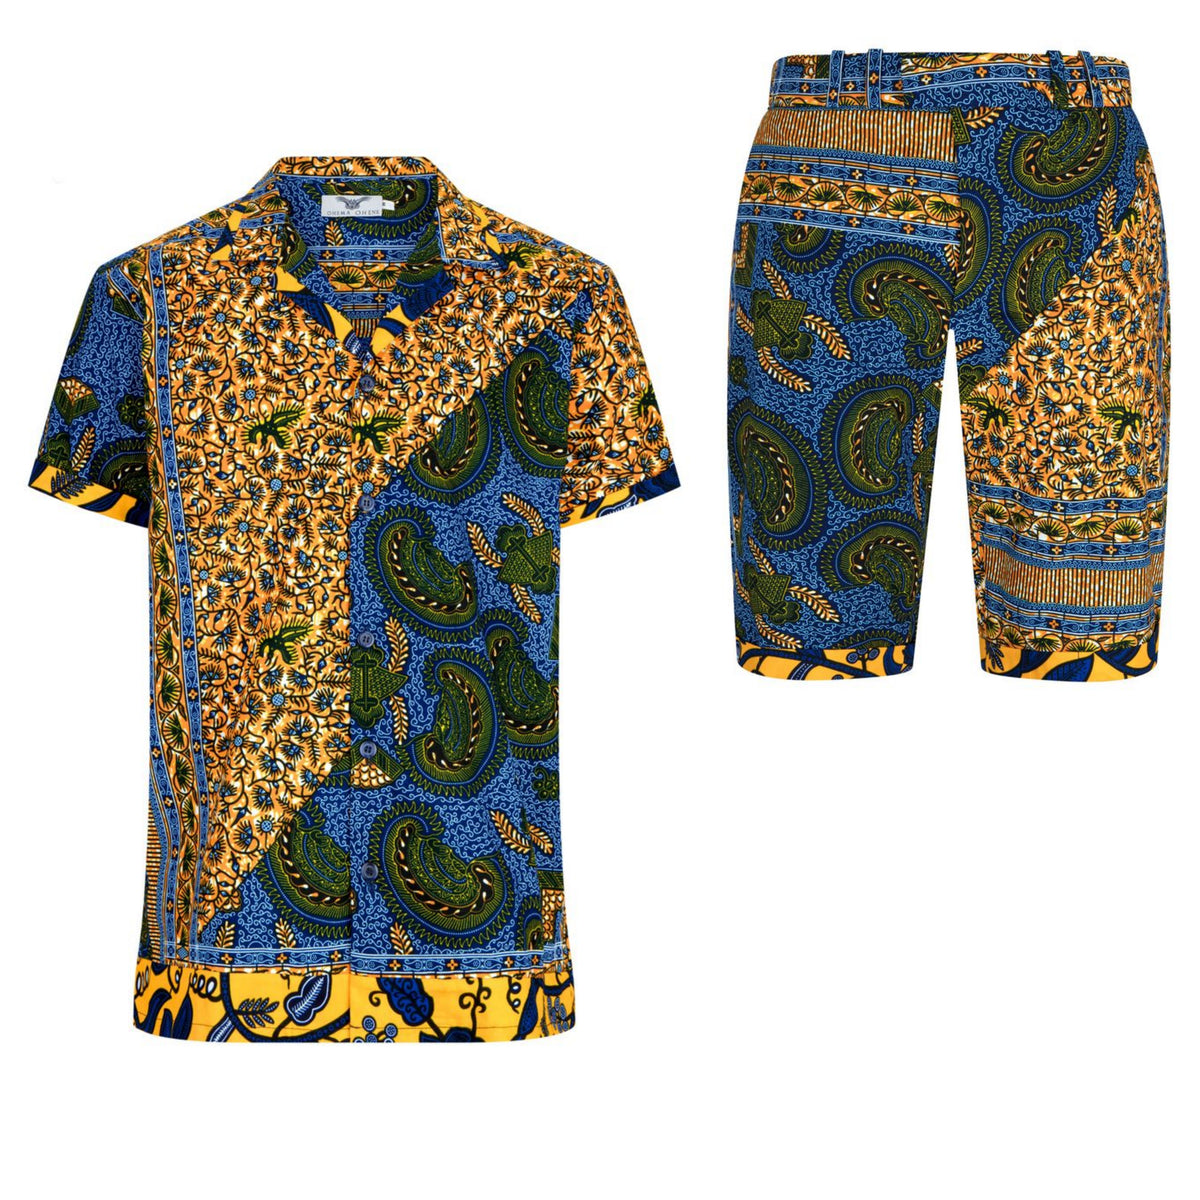 Jamie African print shorts-Meba - OHEMA OHENE AFRICAN INSPIRED FASHION